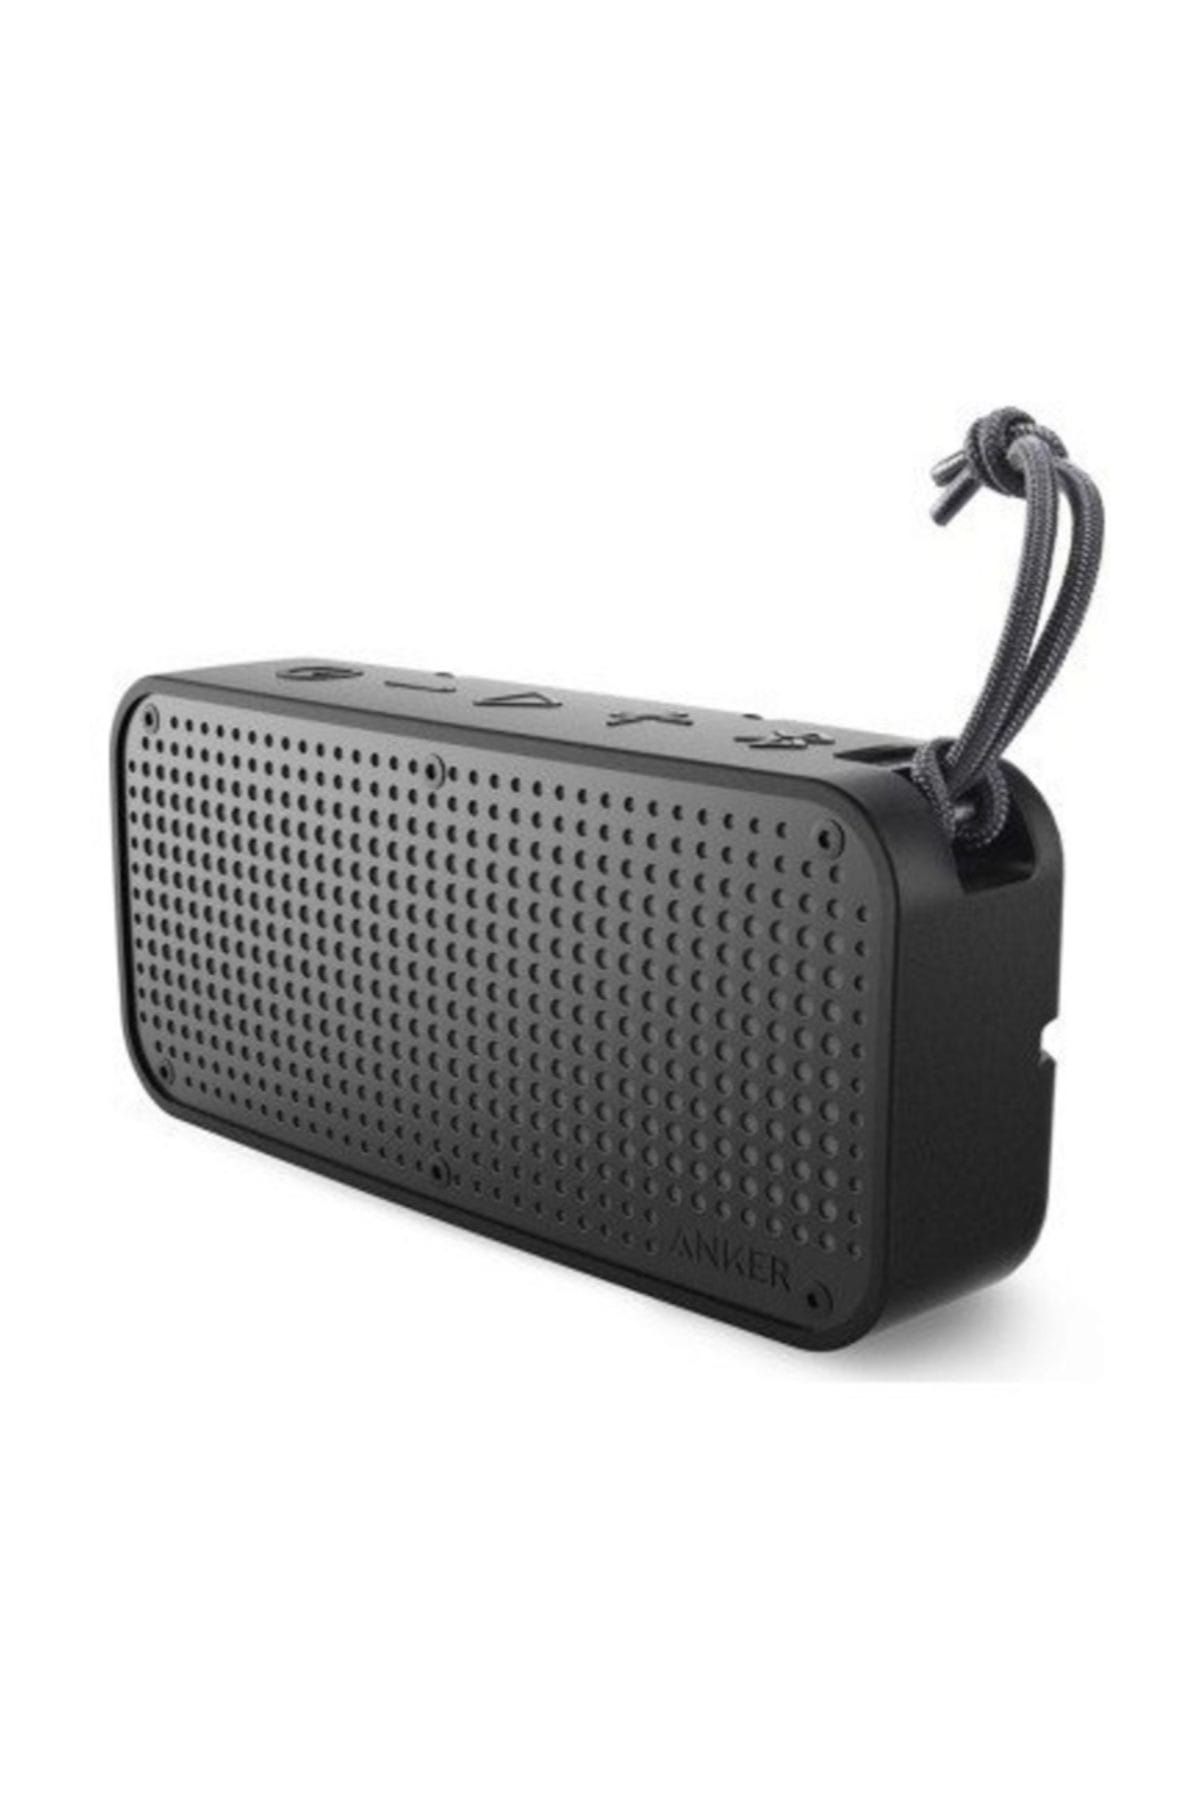 Anker SoundCore Sport XL 16W Su Geçirmez Bluetooth Hoparlör Siyah